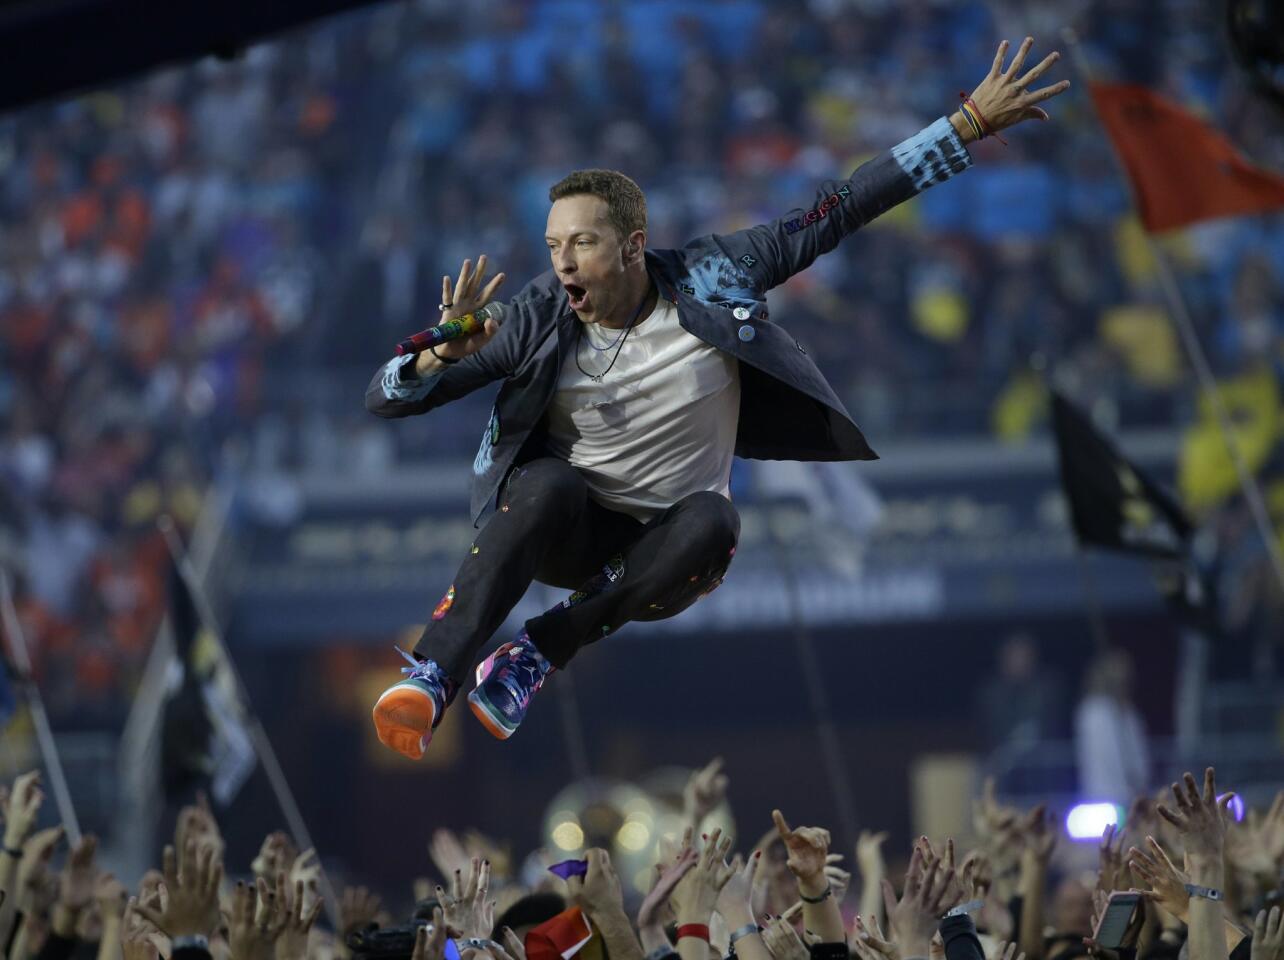 Cold Play lead singer Chris Martin performs during halftime of the NFL Super Bowl 50. AP Photo/Marcio Jose Sanchez